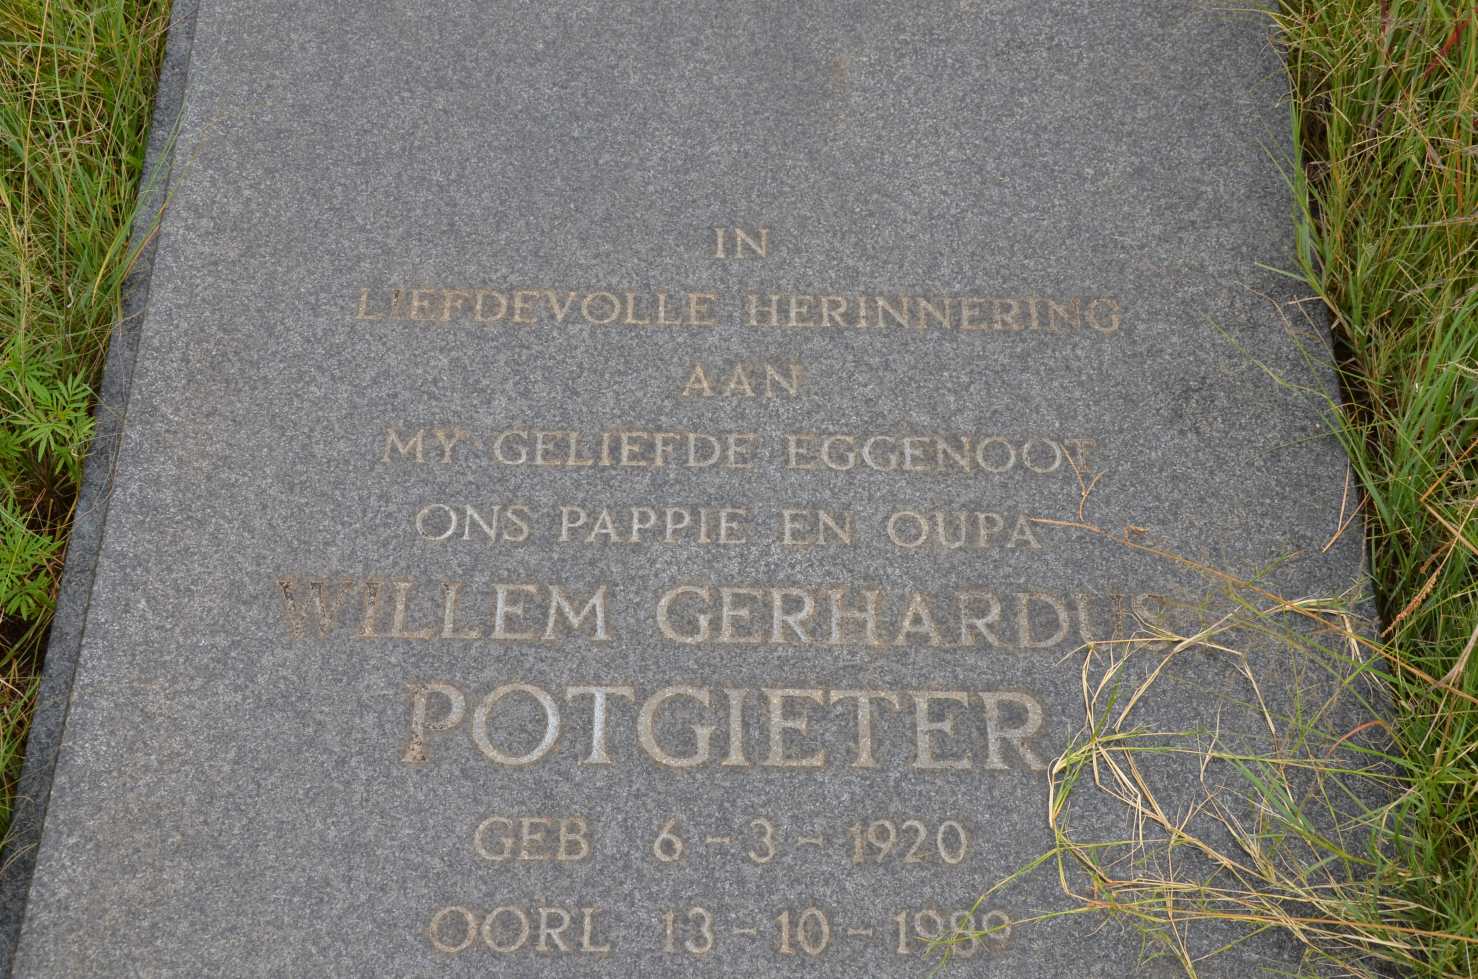 POTGIETER Willem Gerhardus 1920-1989